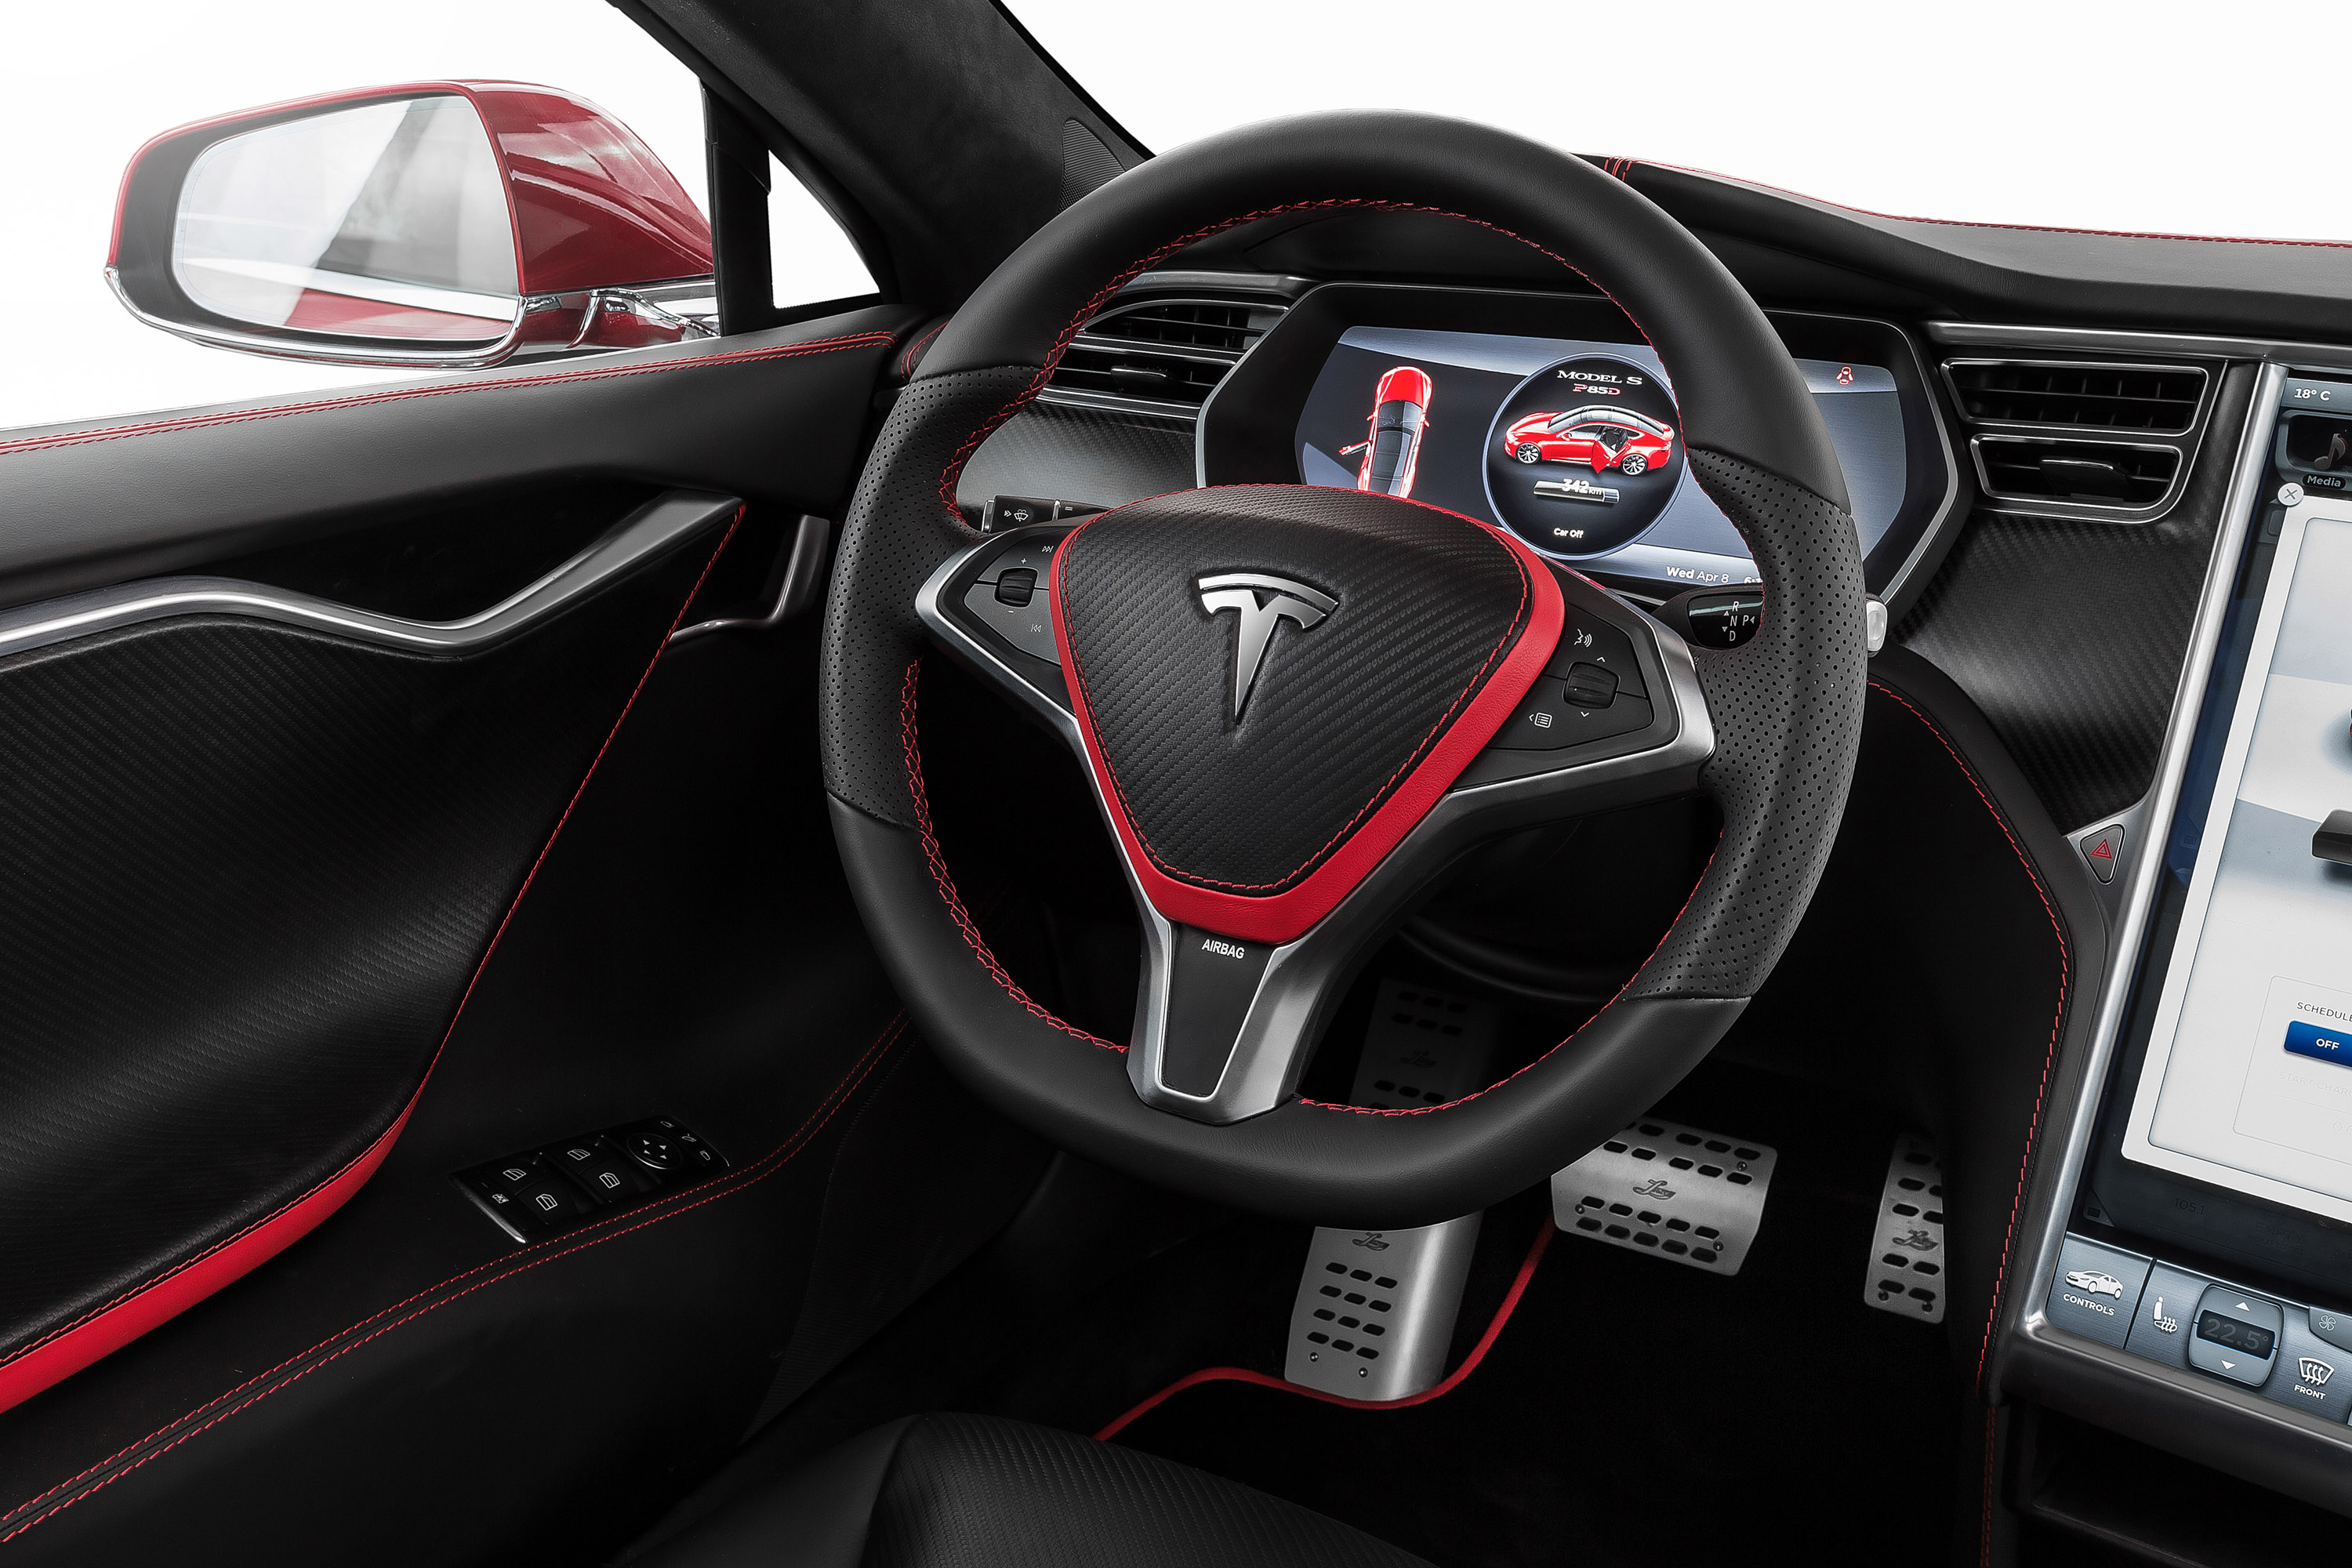 Gloed studio warmte 2015 Larte Design Tesla Model S Elizabeta - HD Picture 13 of 14 - #120595 -  3000x2000